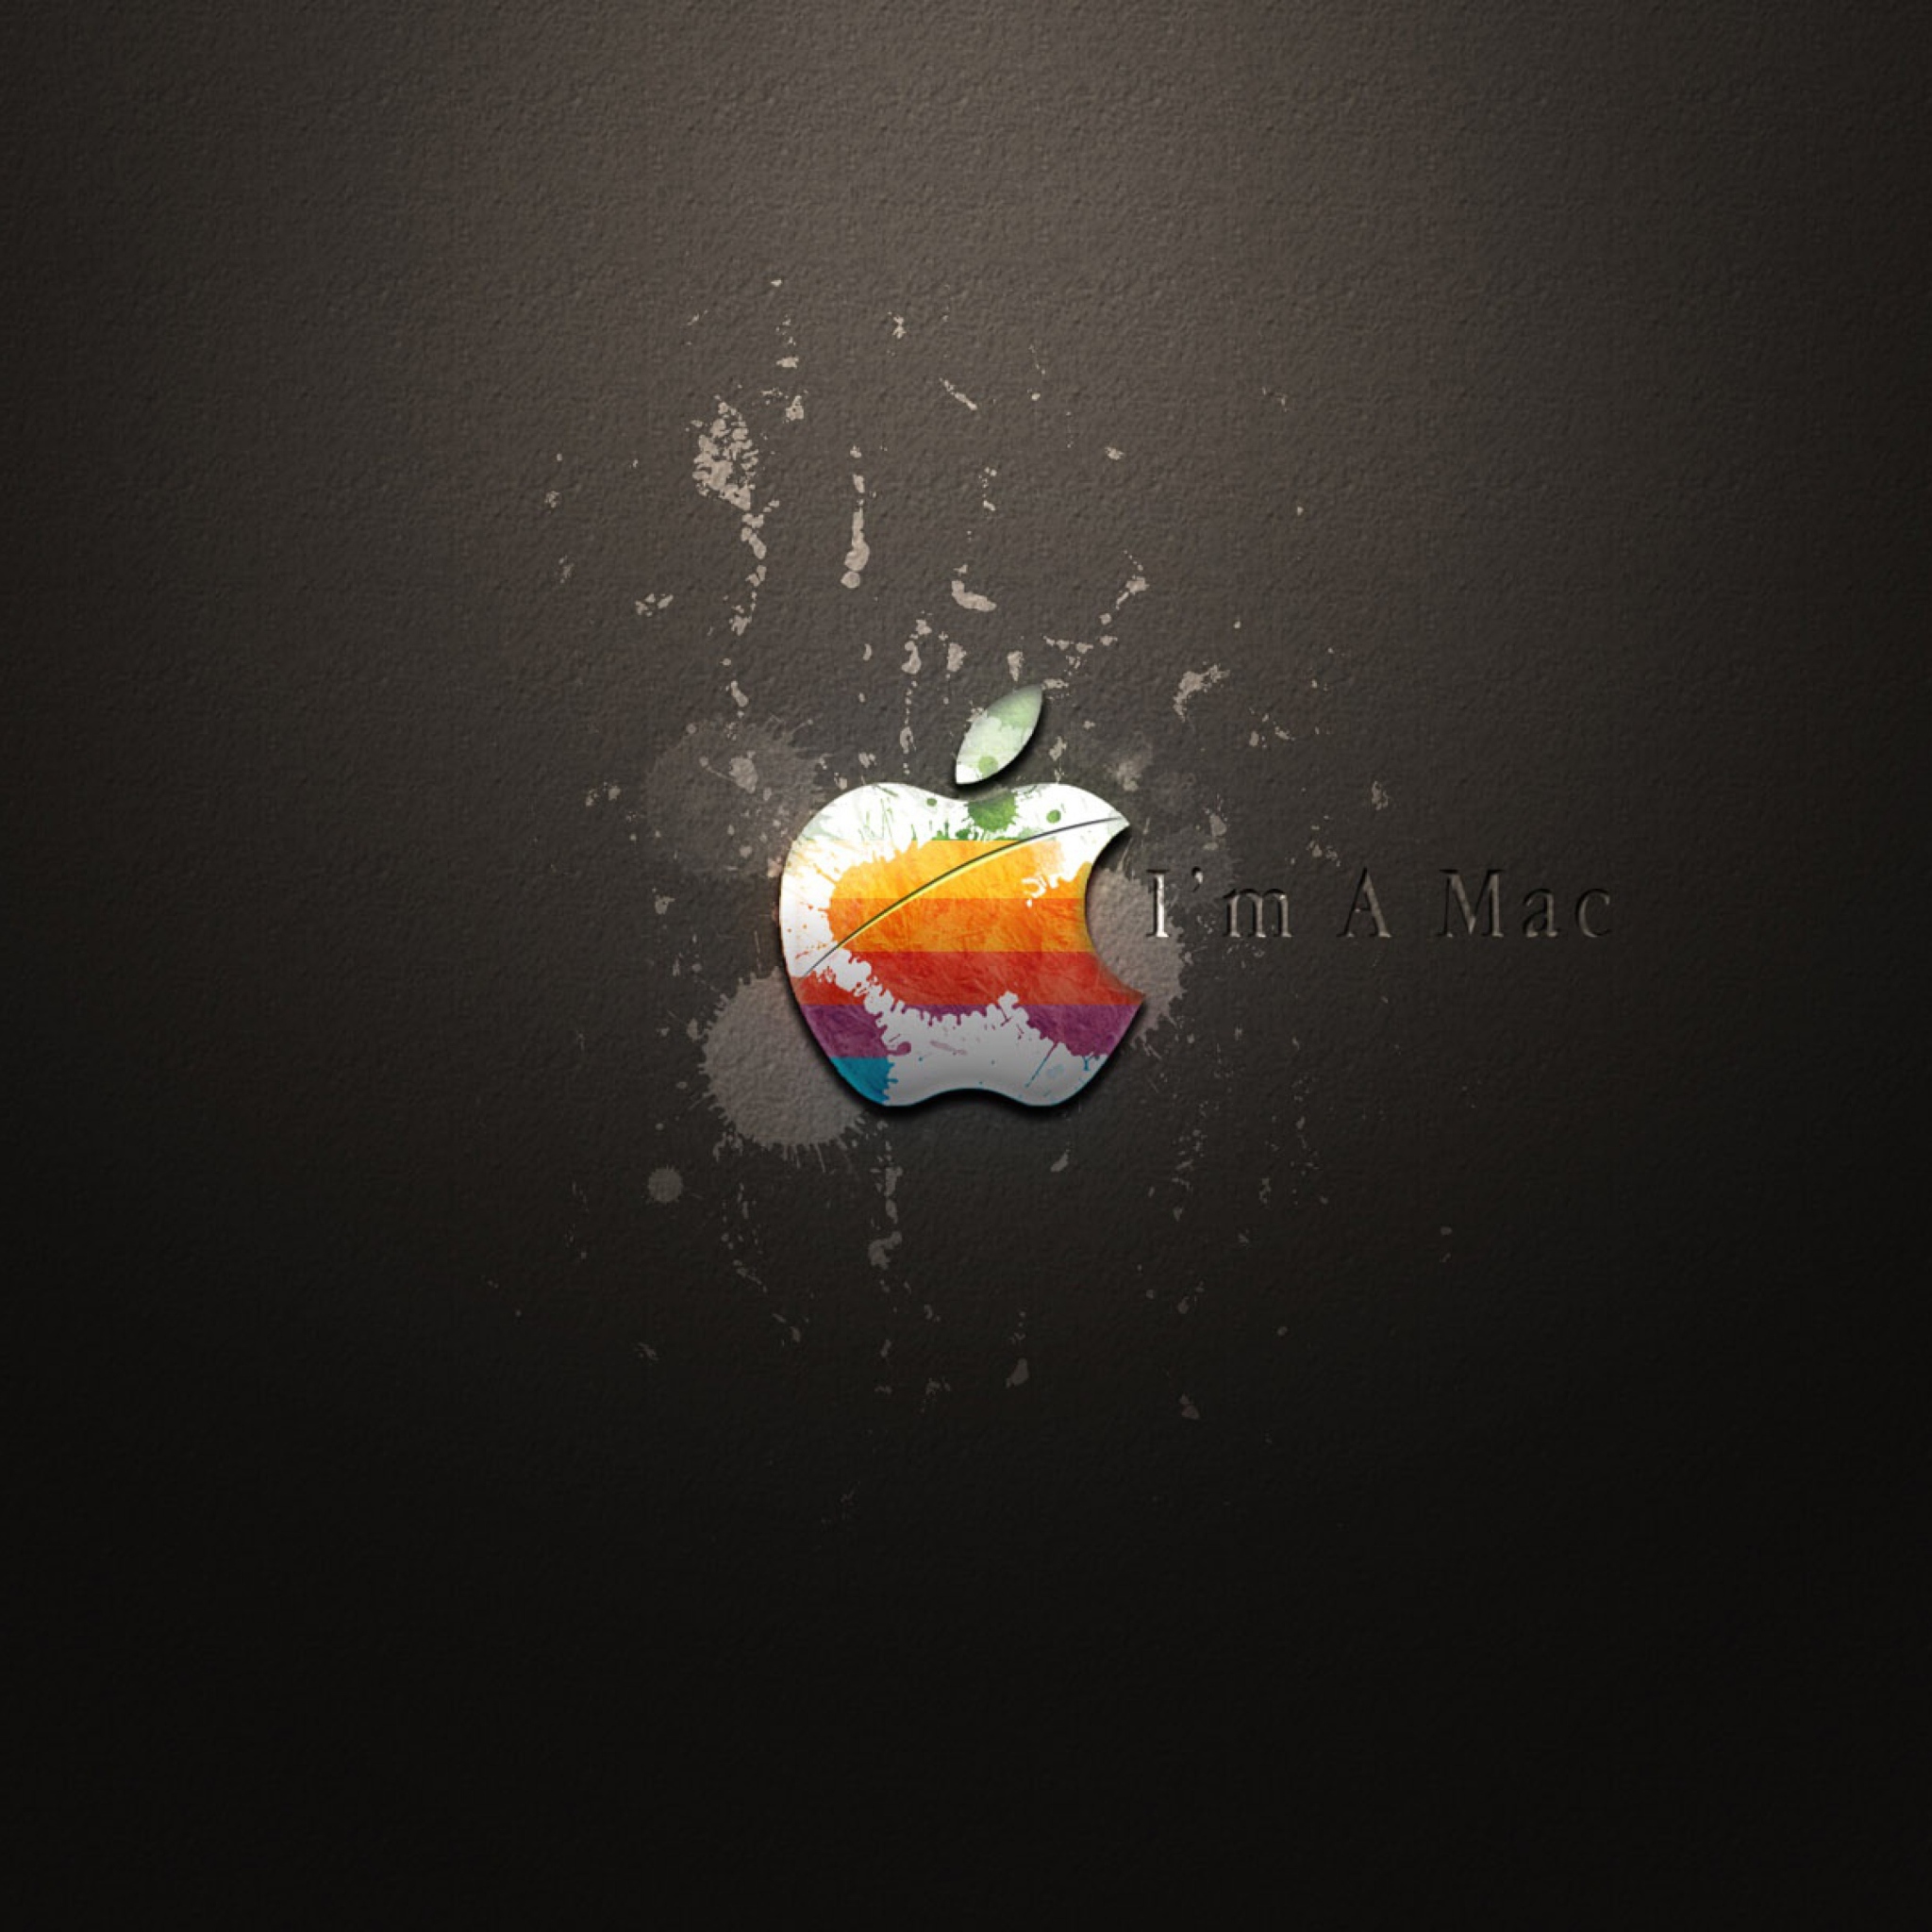 Das Apple I'm A Mac Wallpaper 2048x2048